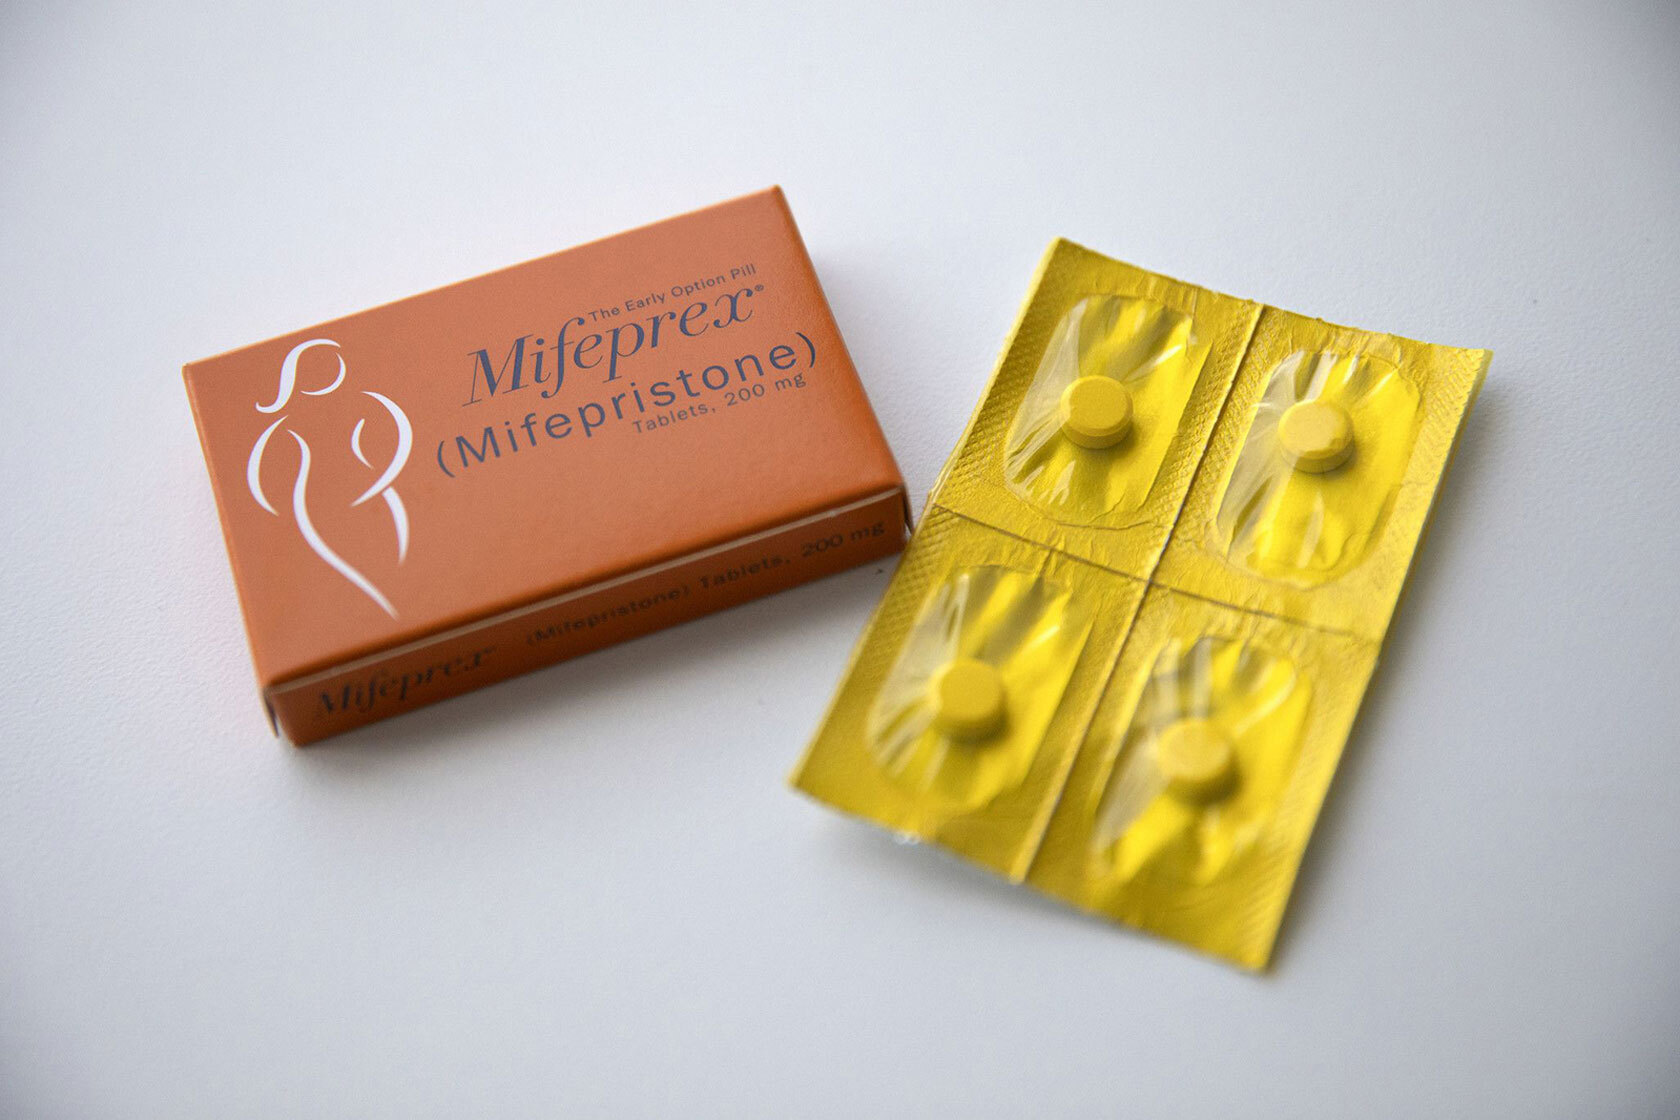 Mifepristone and misoprostol pills